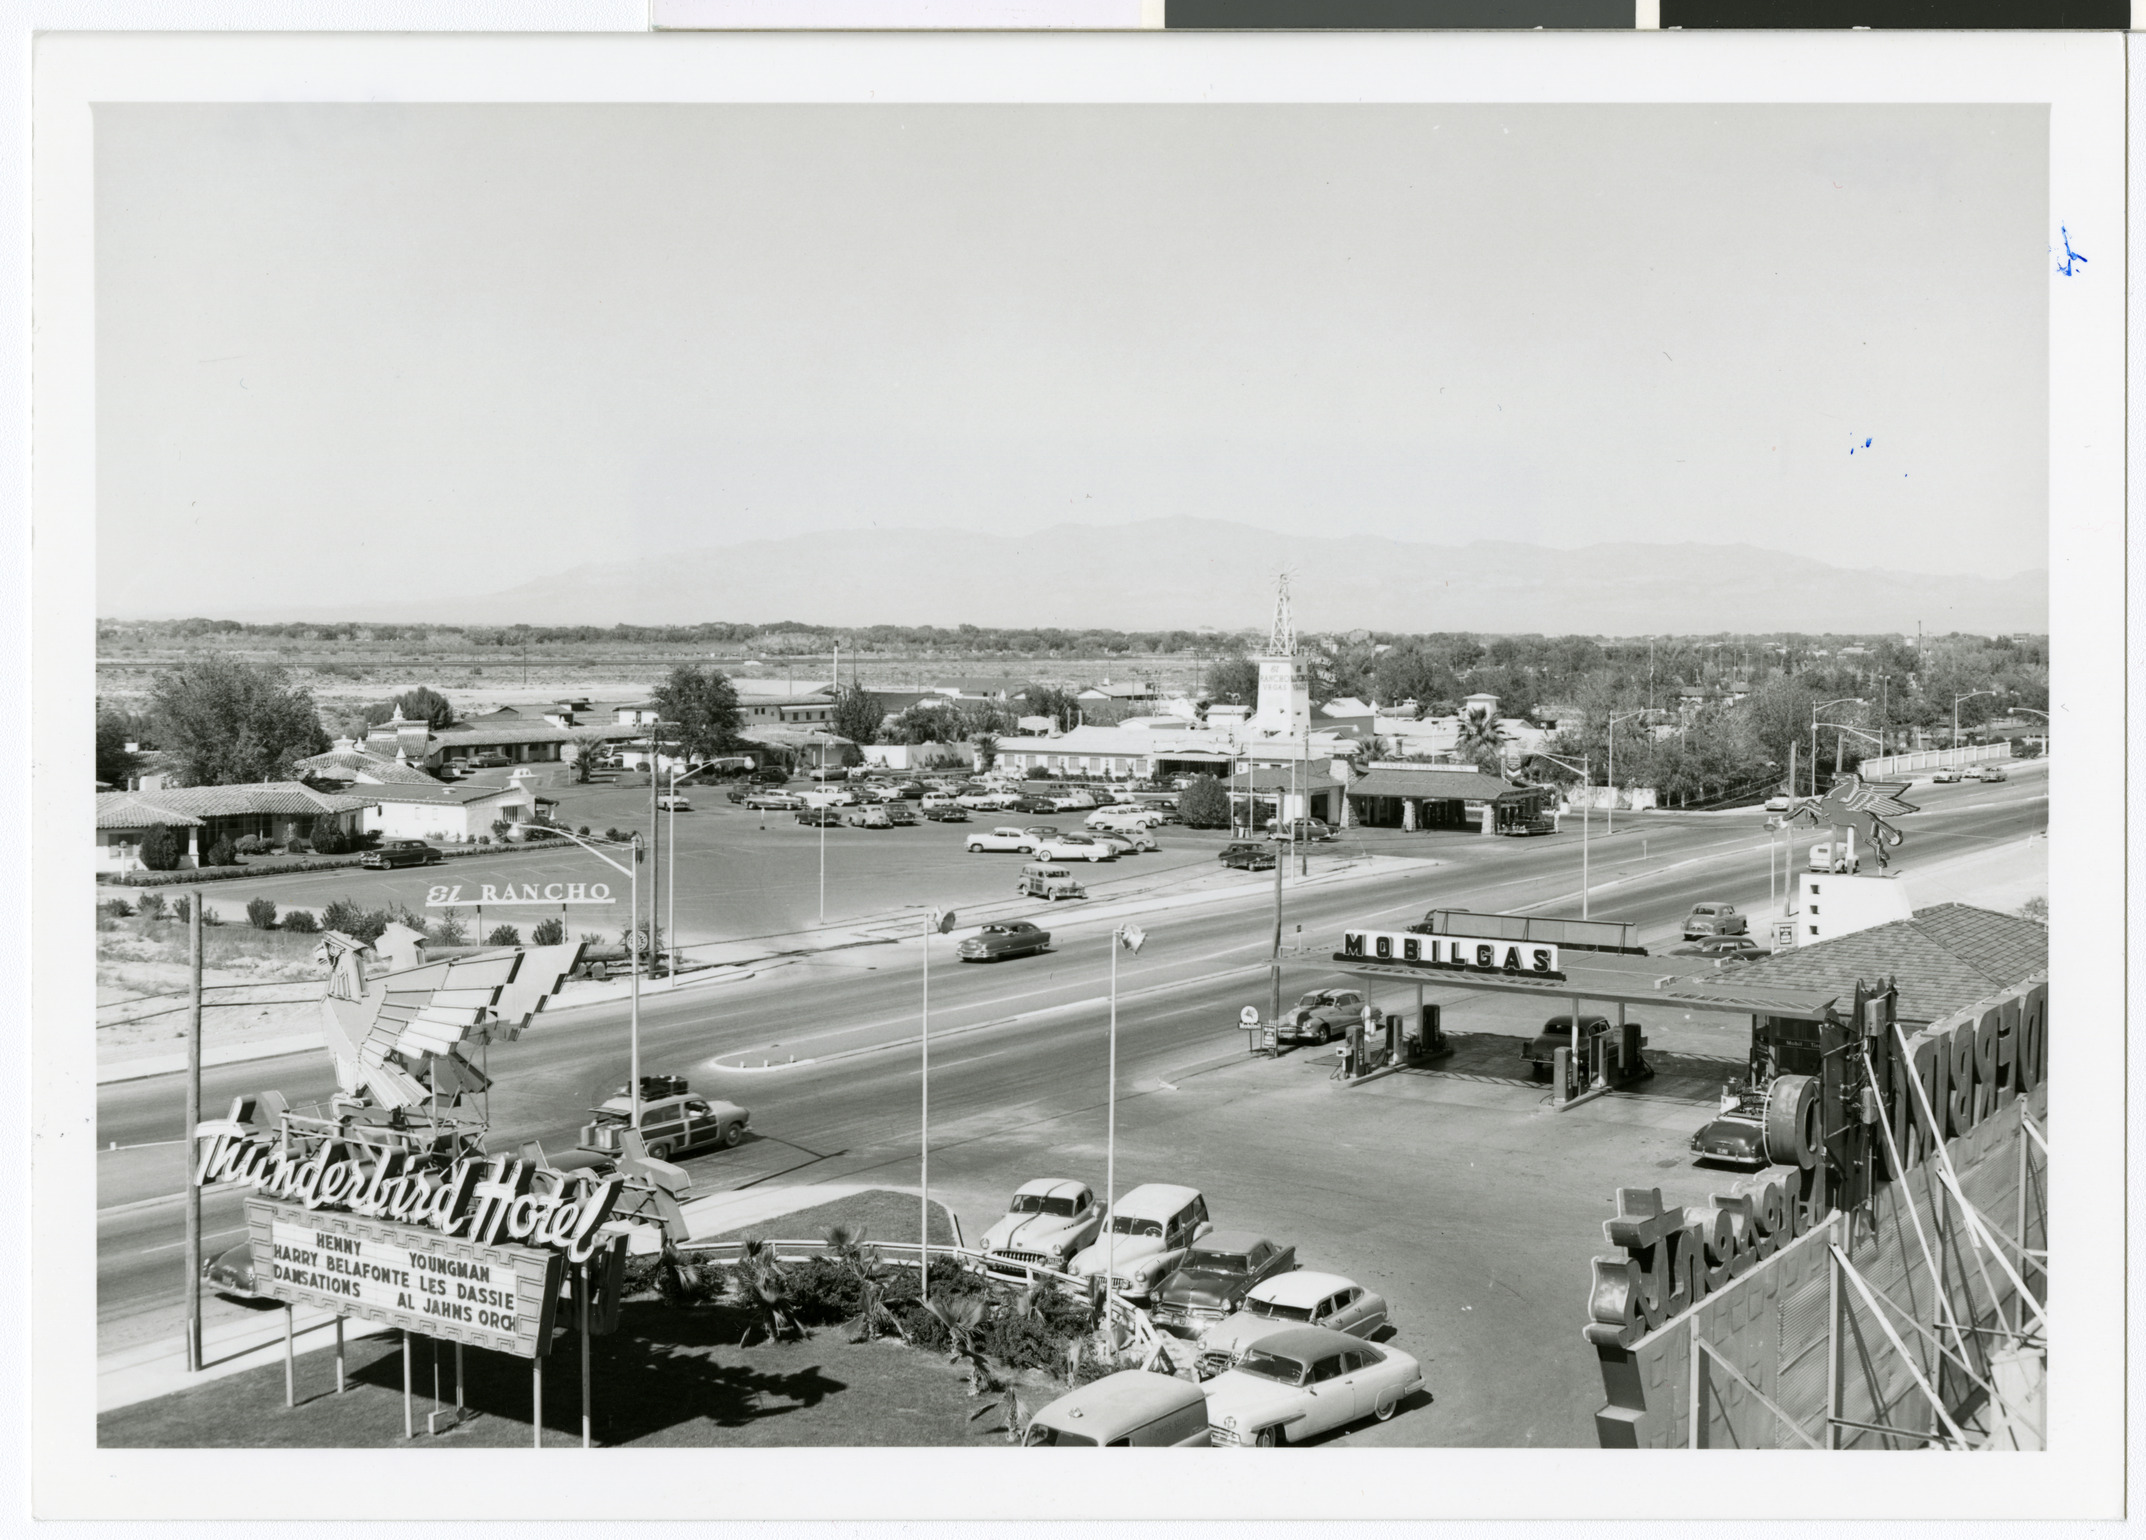 Photograph of Highway 91 (Las Vegas), circa early 1950s